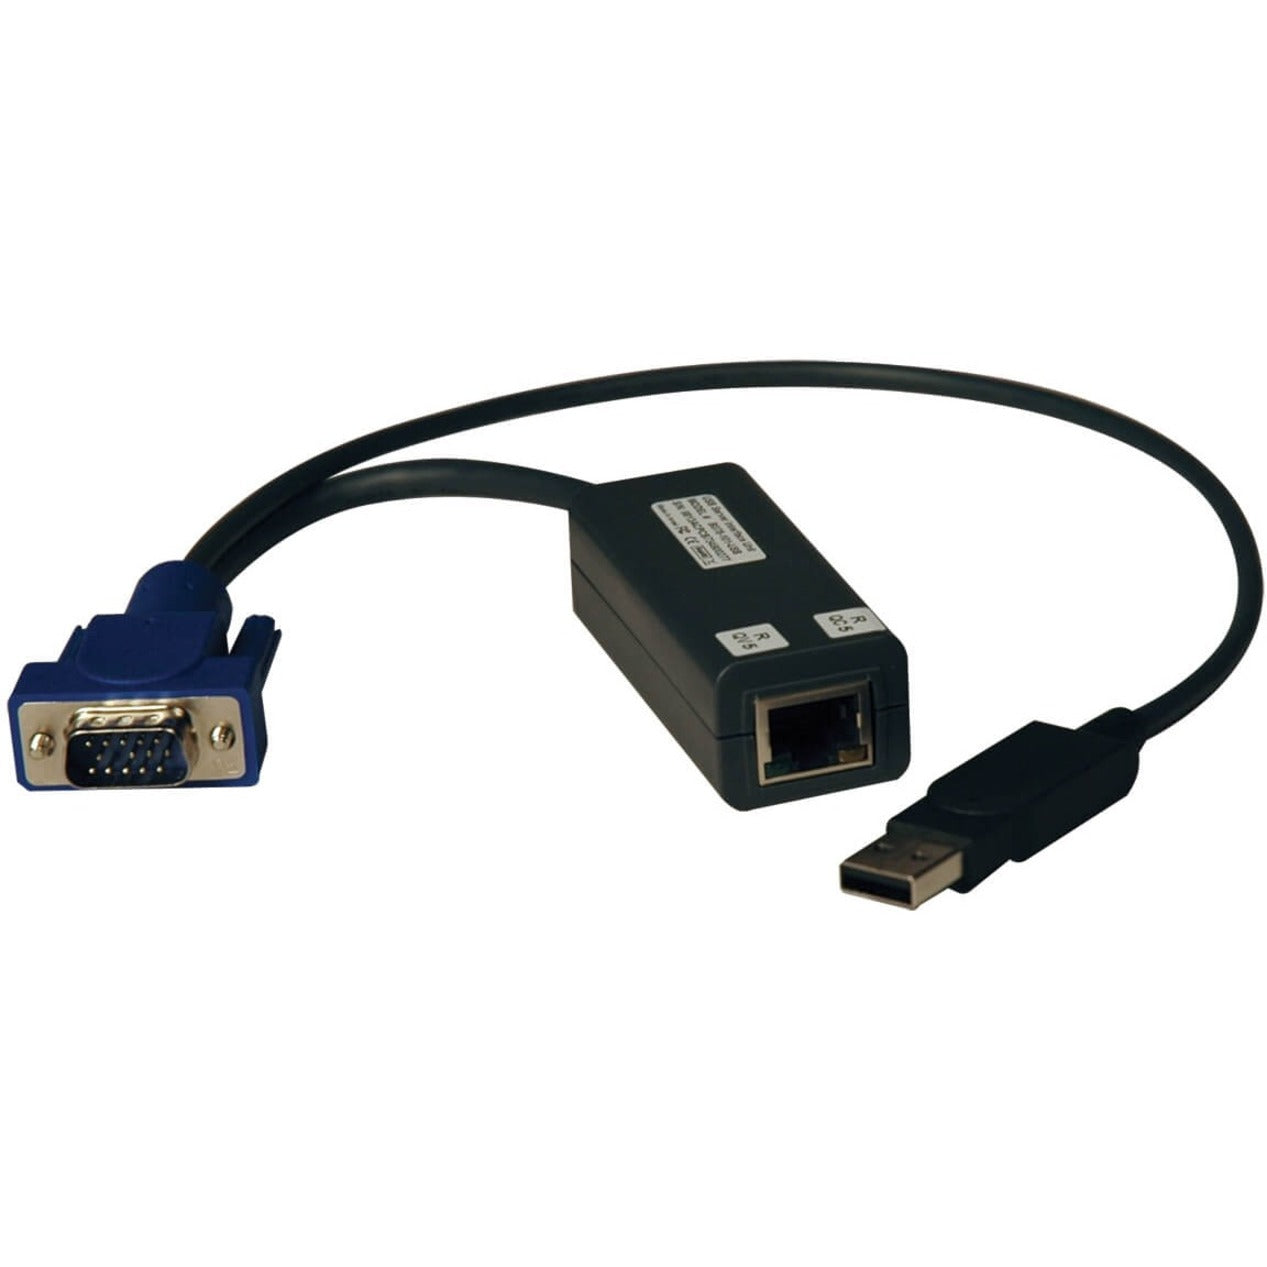 Tripp Lite B078-101-USB-1 NetCommander USB サーバー インターフェイス ユニット（SIU）KVM ケーブル、RJ-45/USB/VGA、ブラック ブランド名: トリップライト